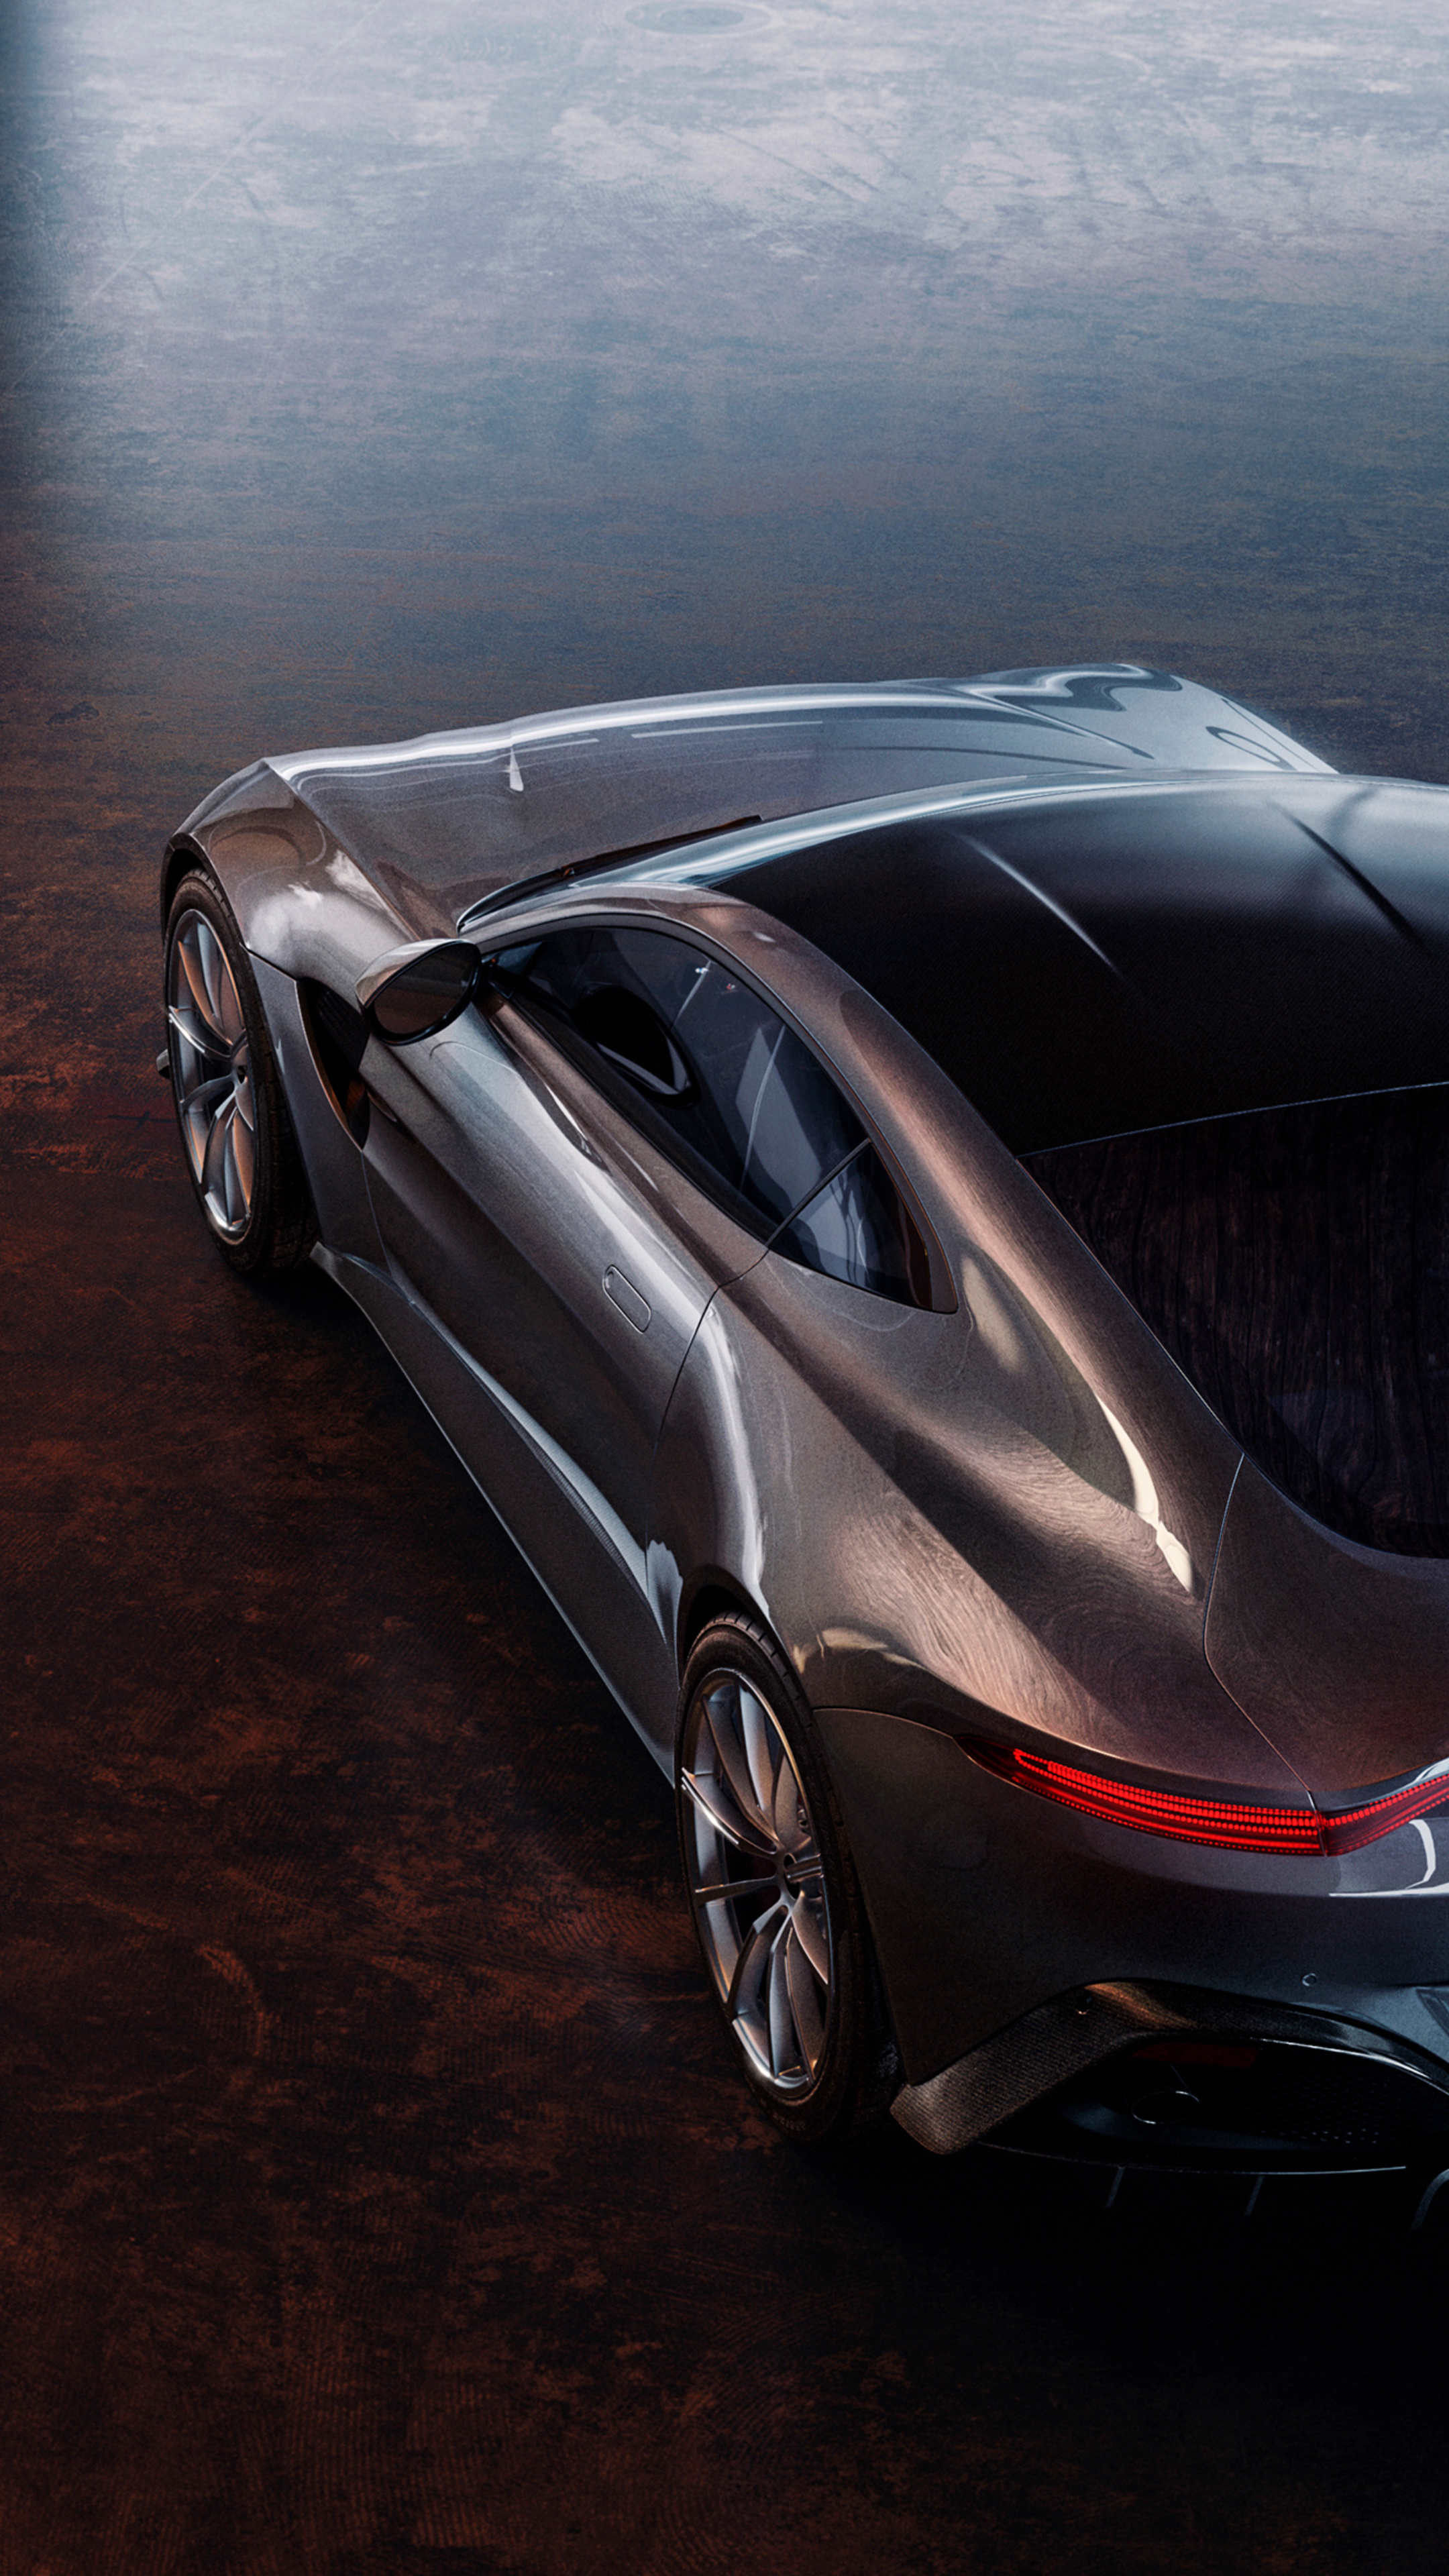 Aston Martin Vantage, Upper view magnificence, Xperia XZ wallpapers, Premium 4K images, 2160x3840 4K Handy